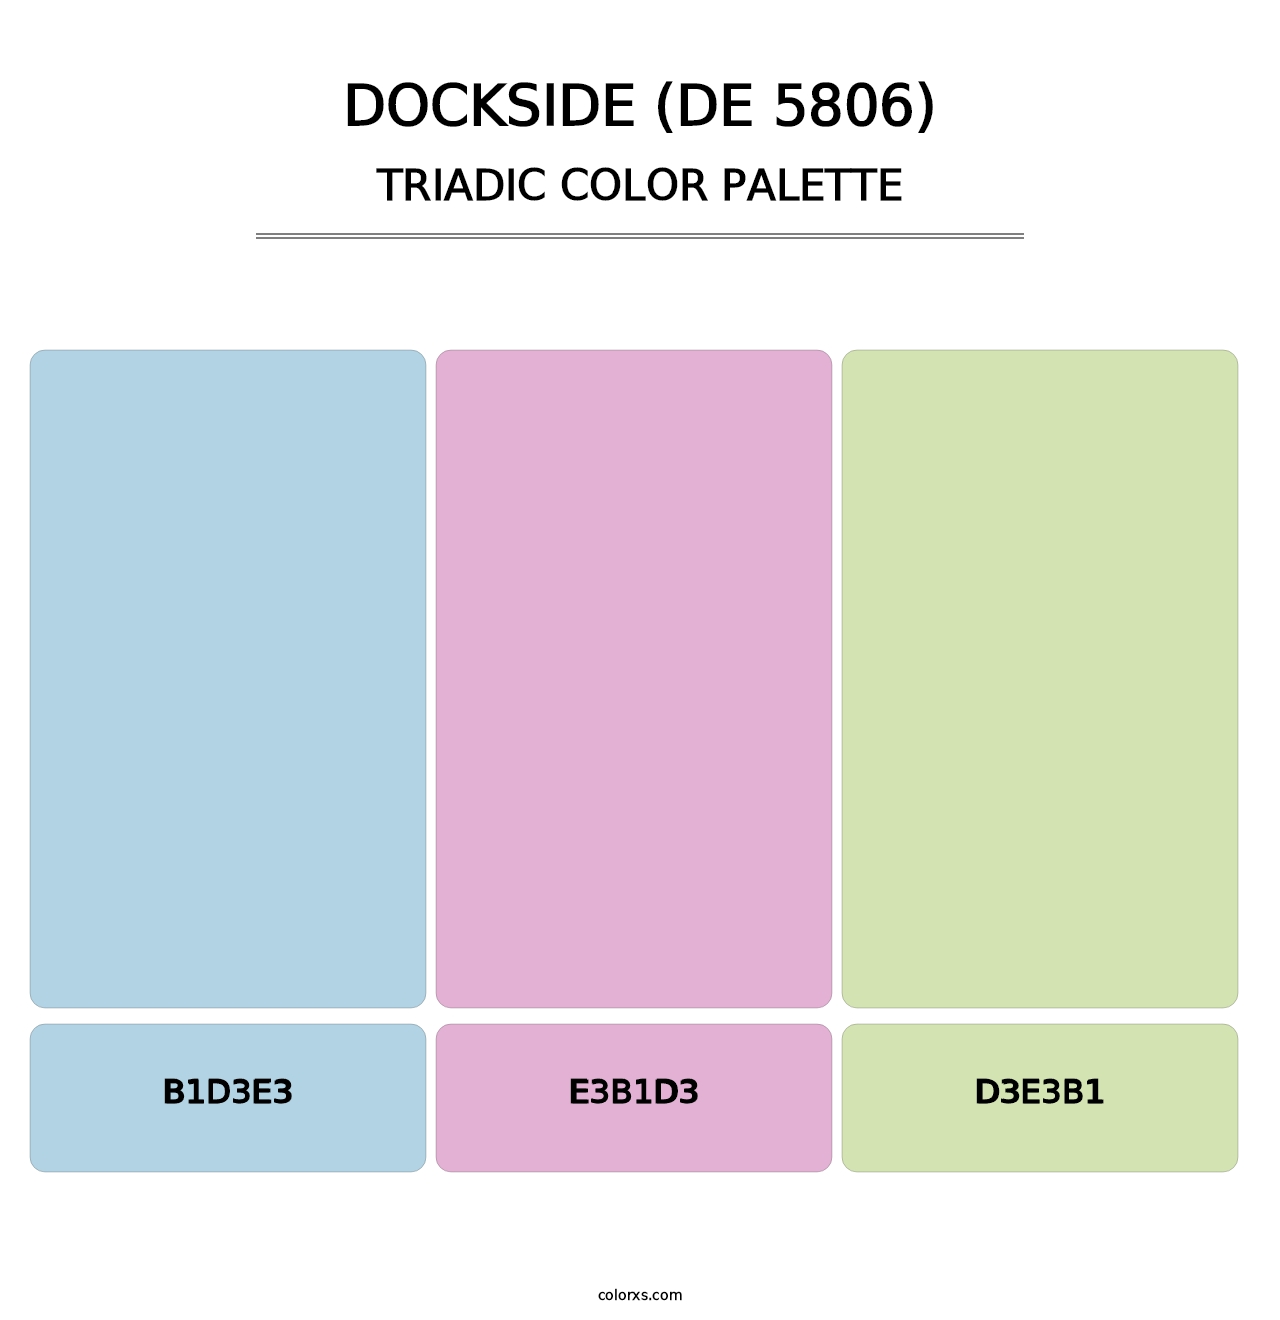 Dockside (DE 5806) - Triadic Color Palette